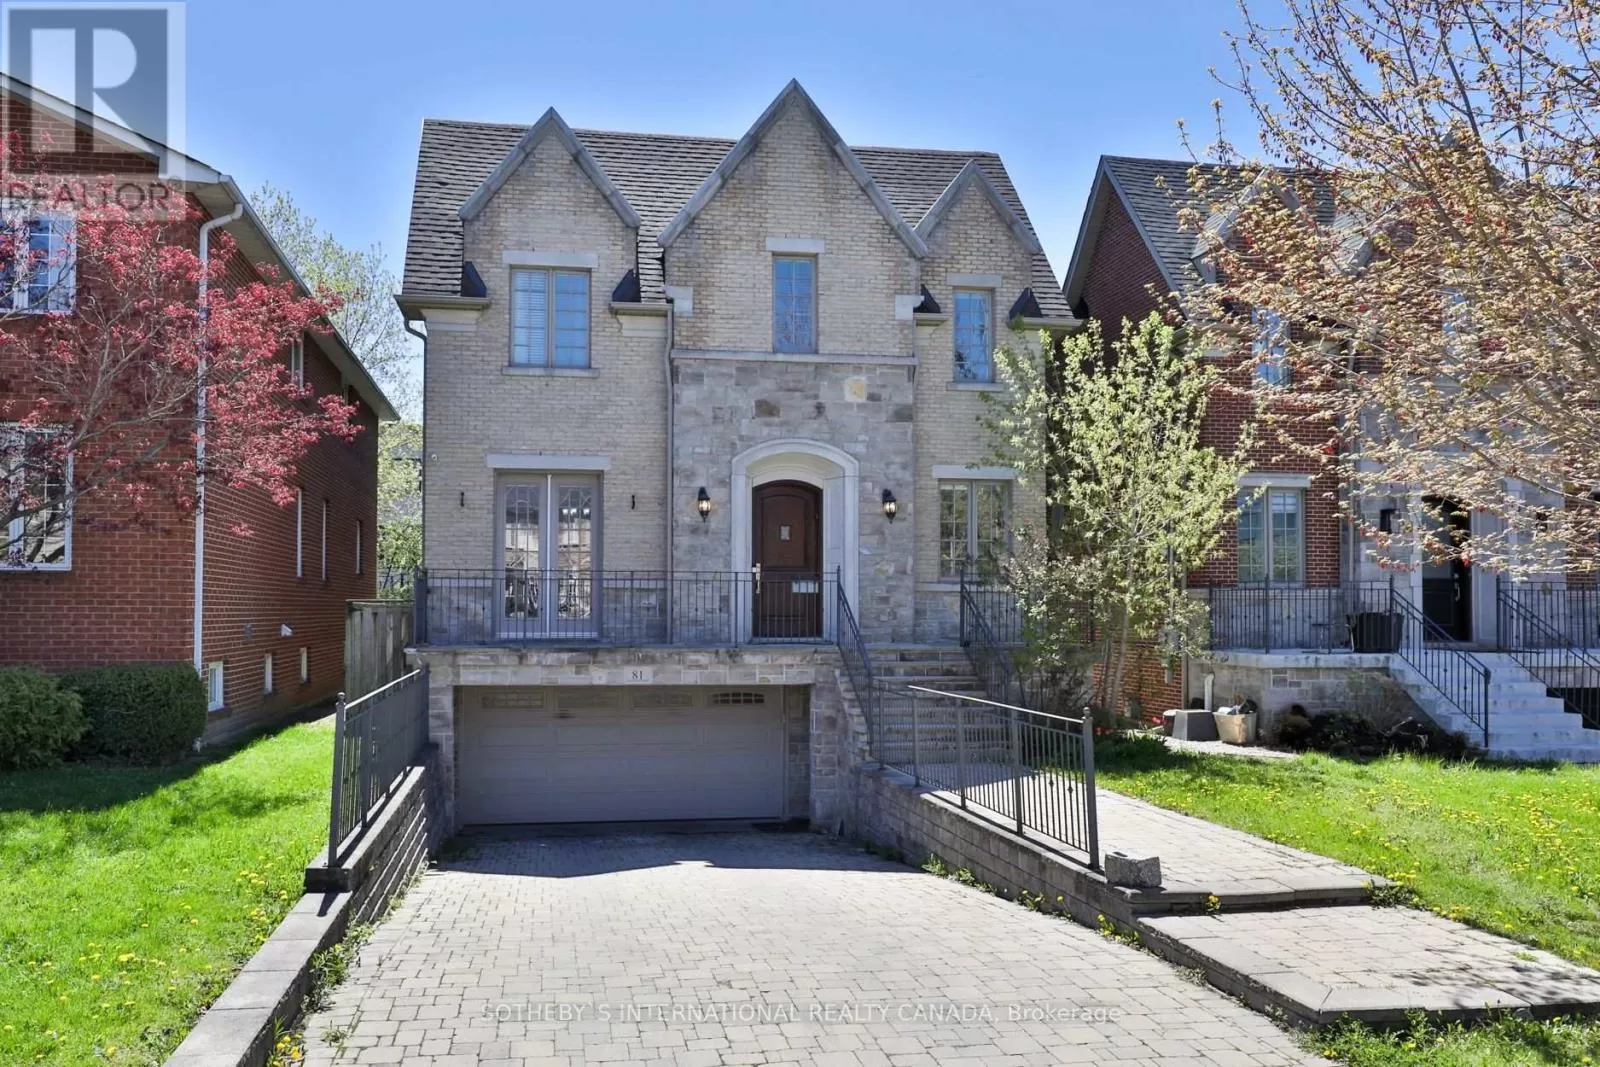 House for rent: 81 Stormont Avenue, Toronto, Ontario M5N 2C3